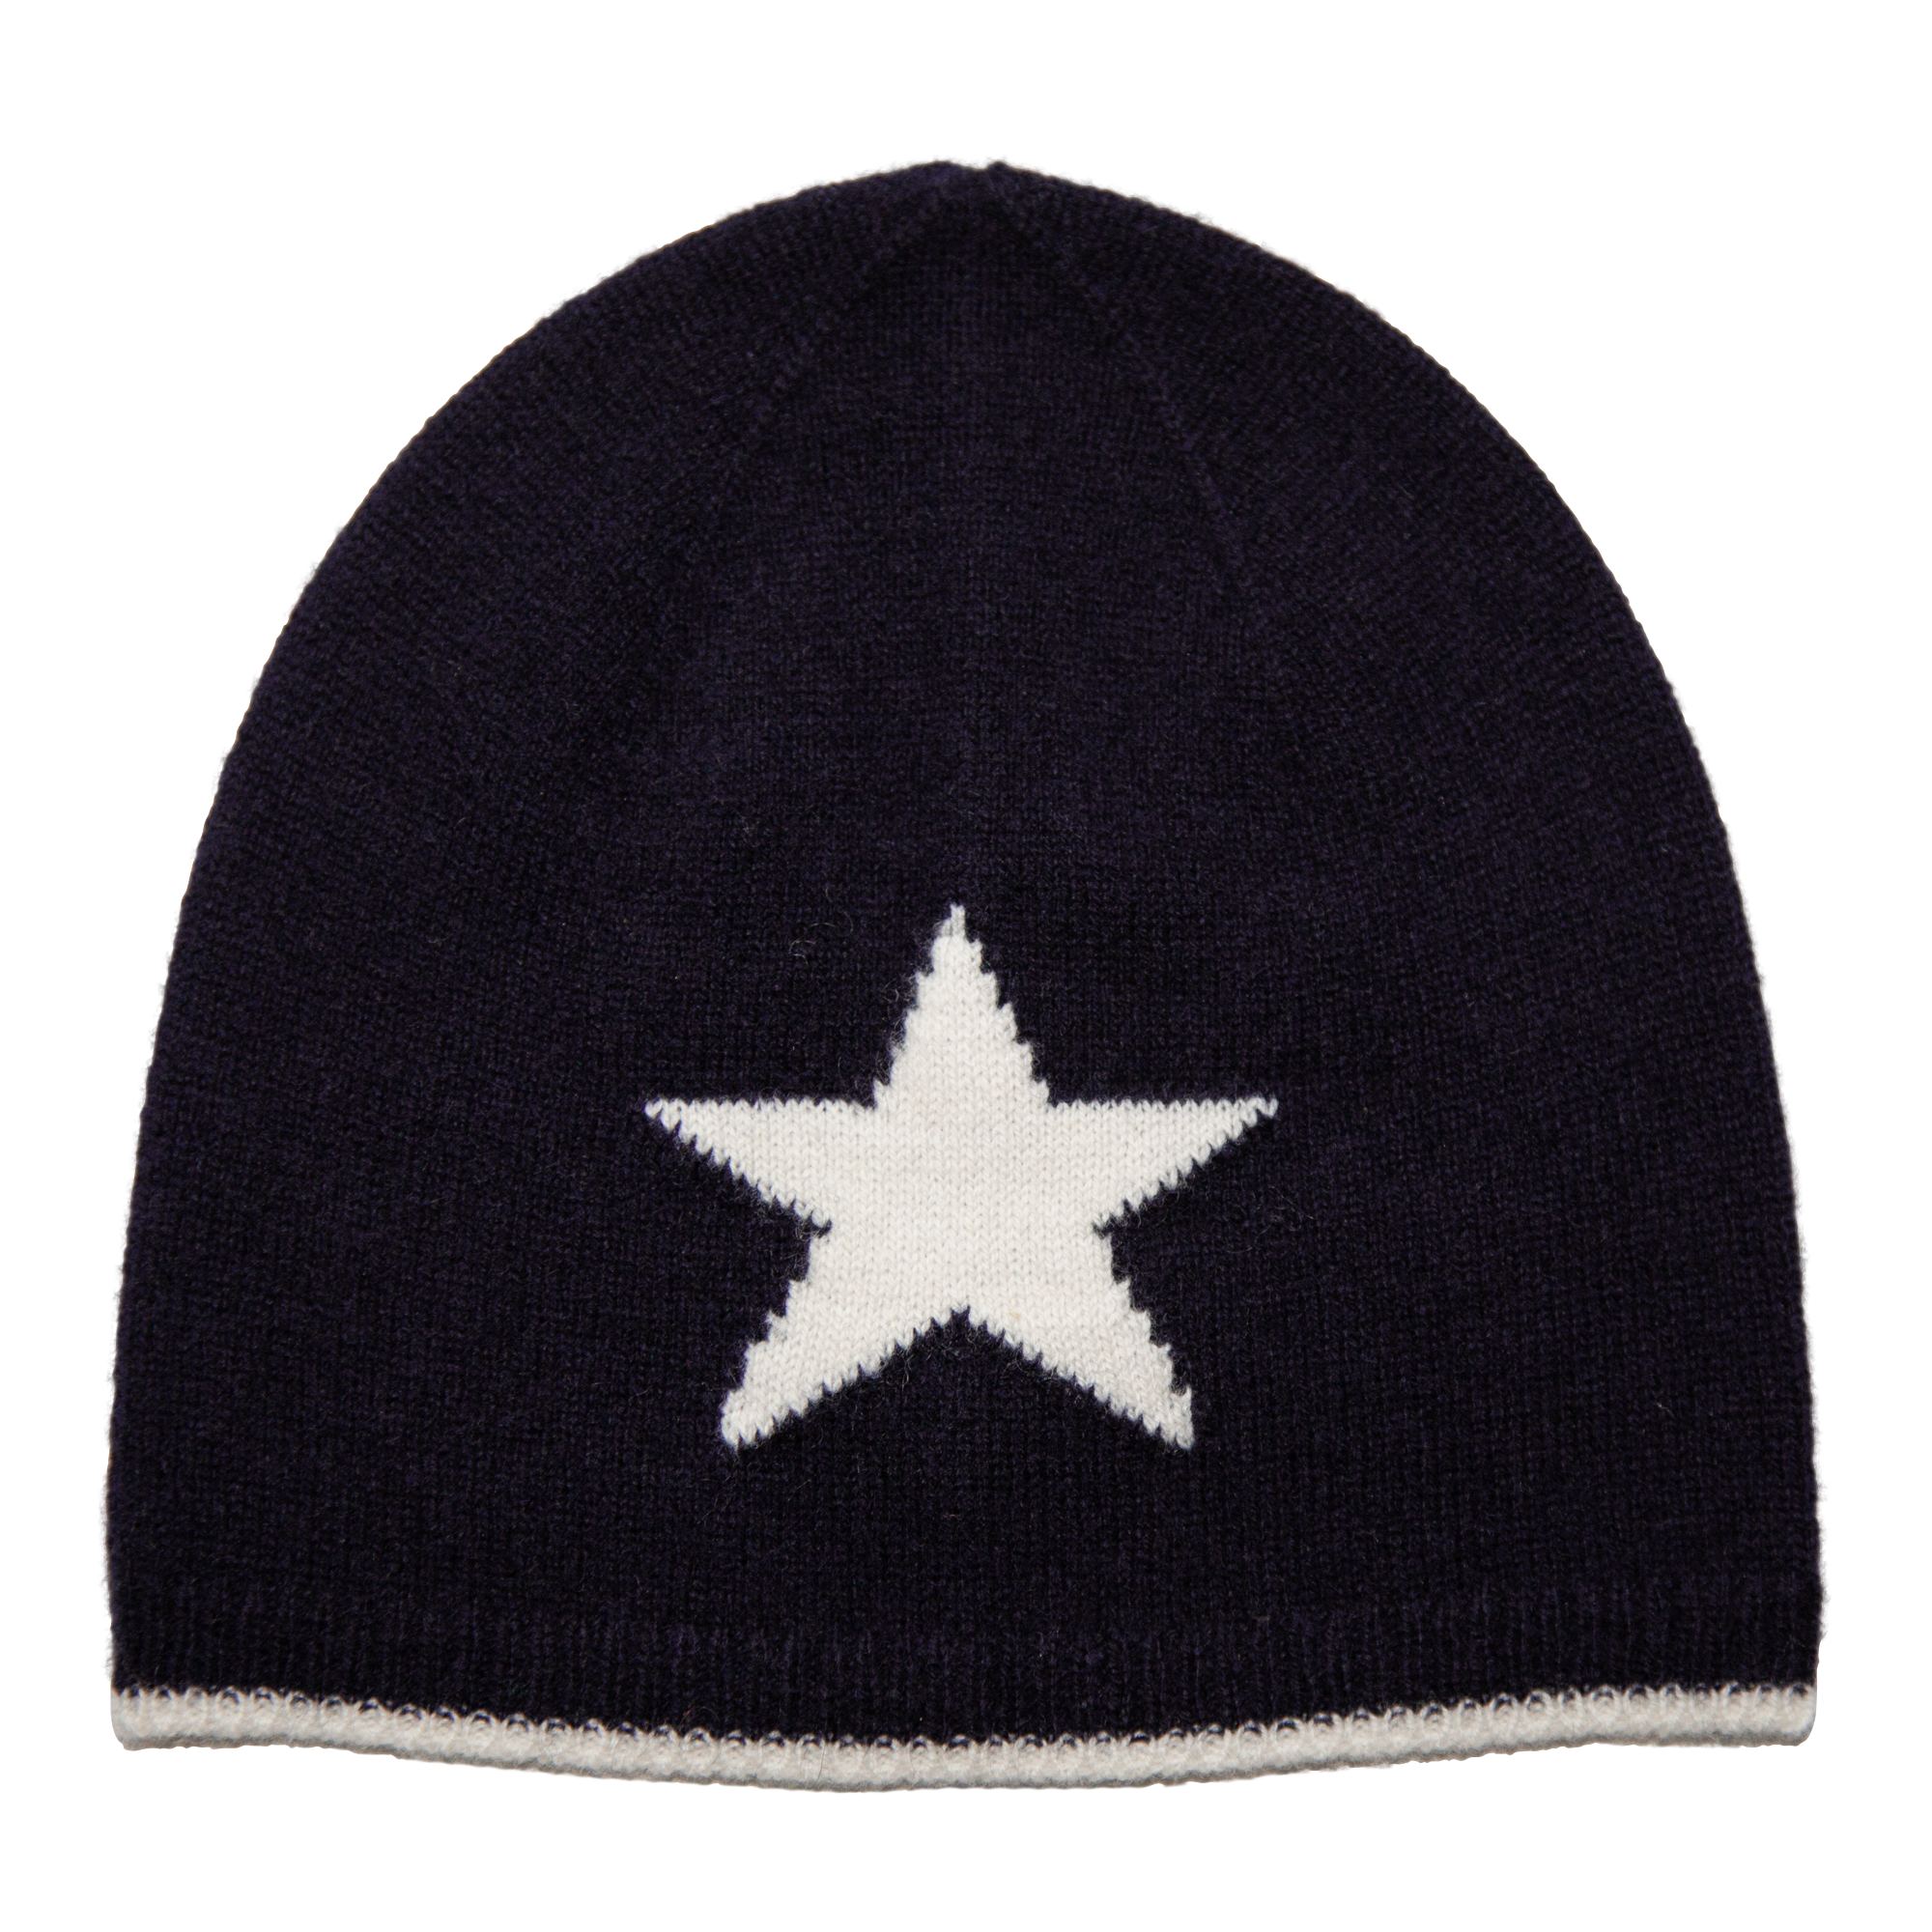 Mütze STAR 